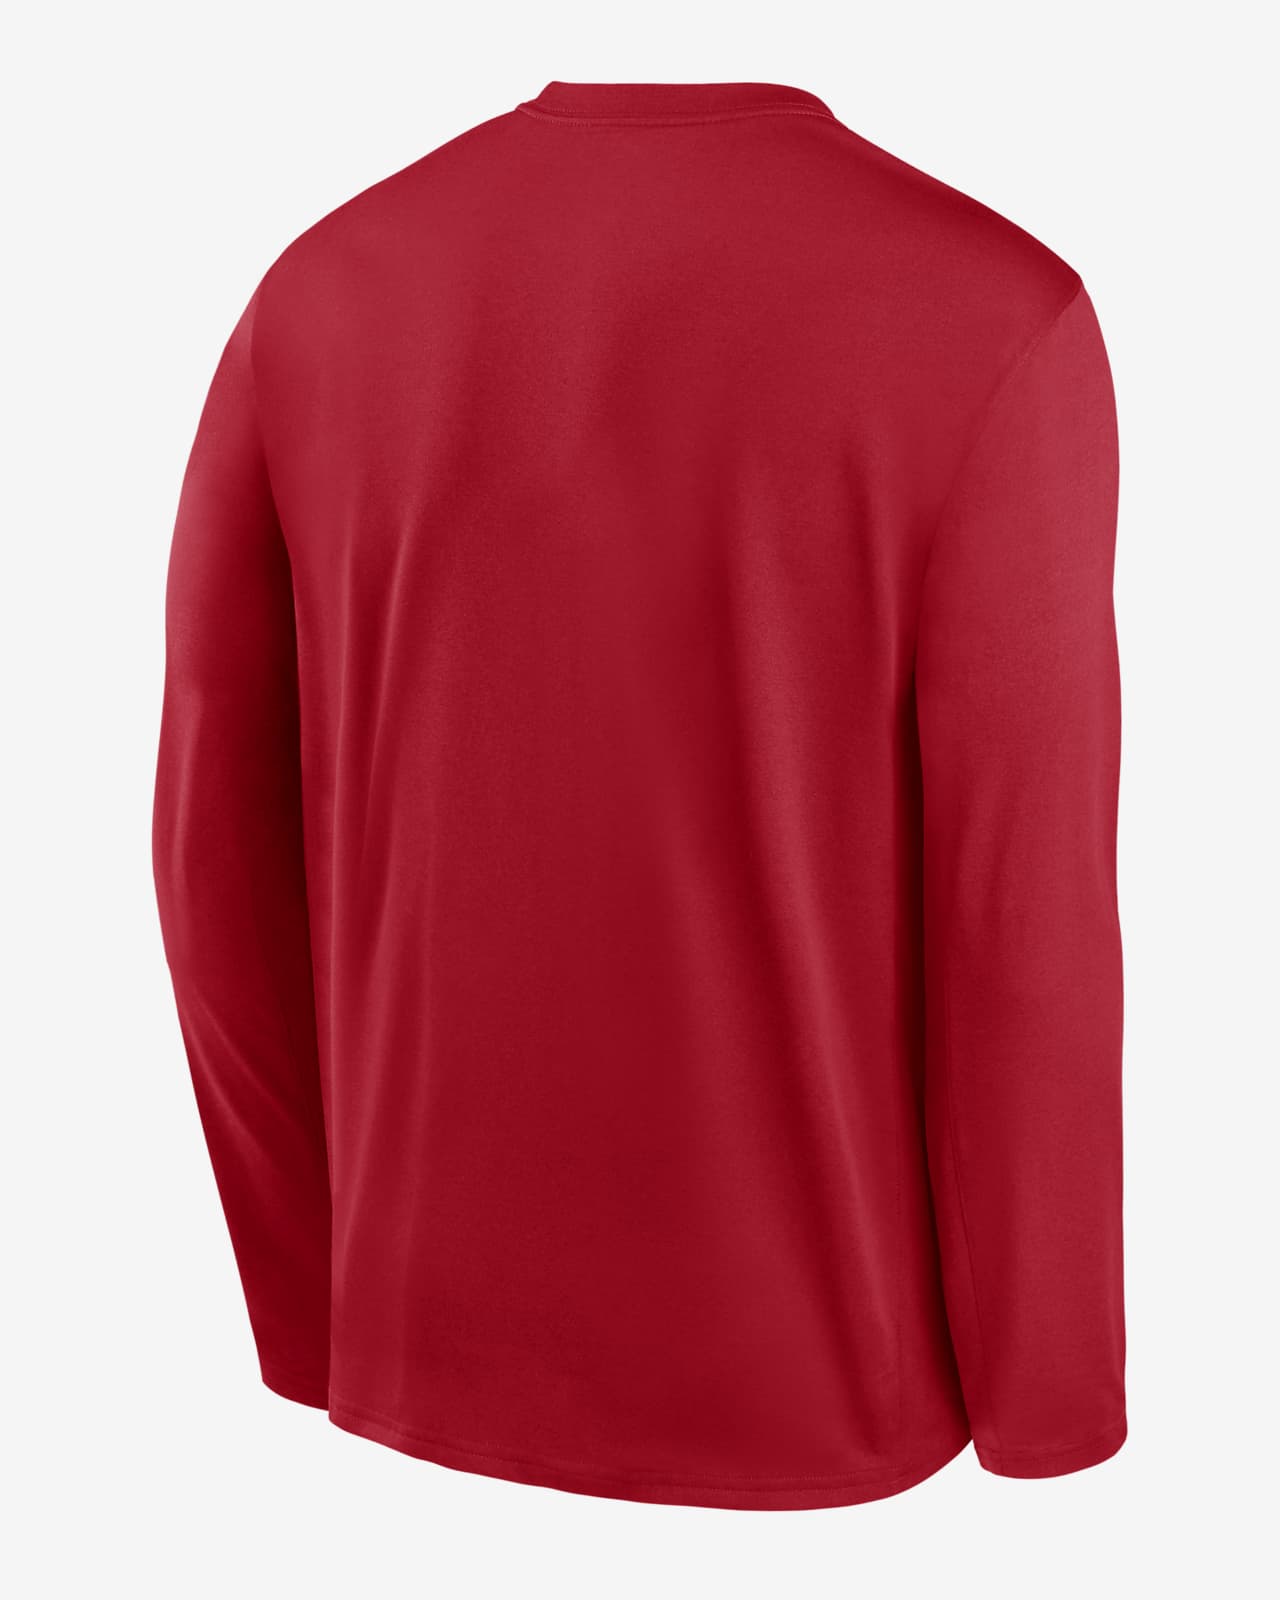 Nike Dri-FIT Team Legend (MLB Chicago White Sox) Men's Long-Sleeve T-Shirt.